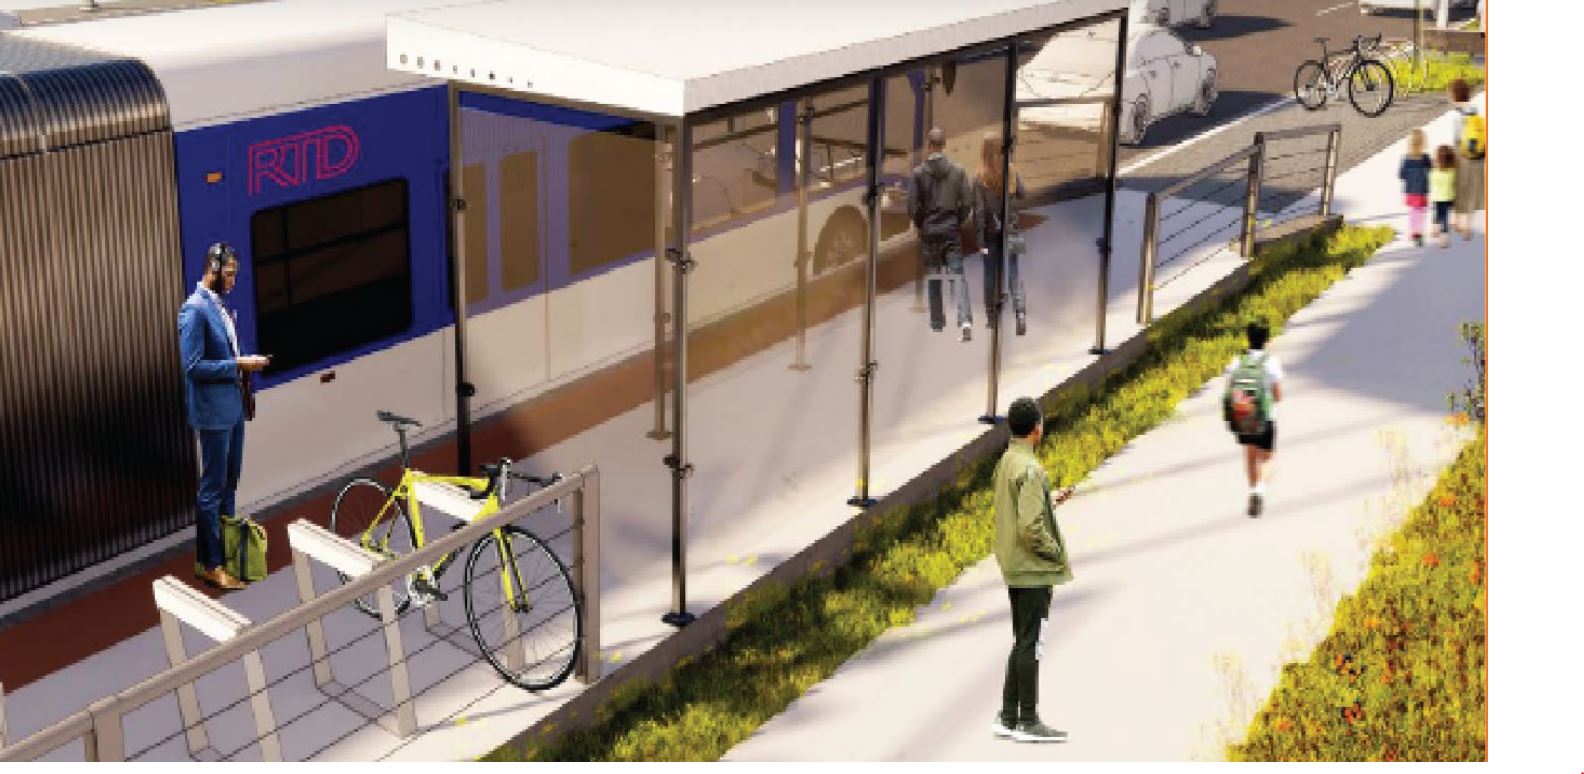 Denver BRT light rail station sketch and design rendering.JPG detail image